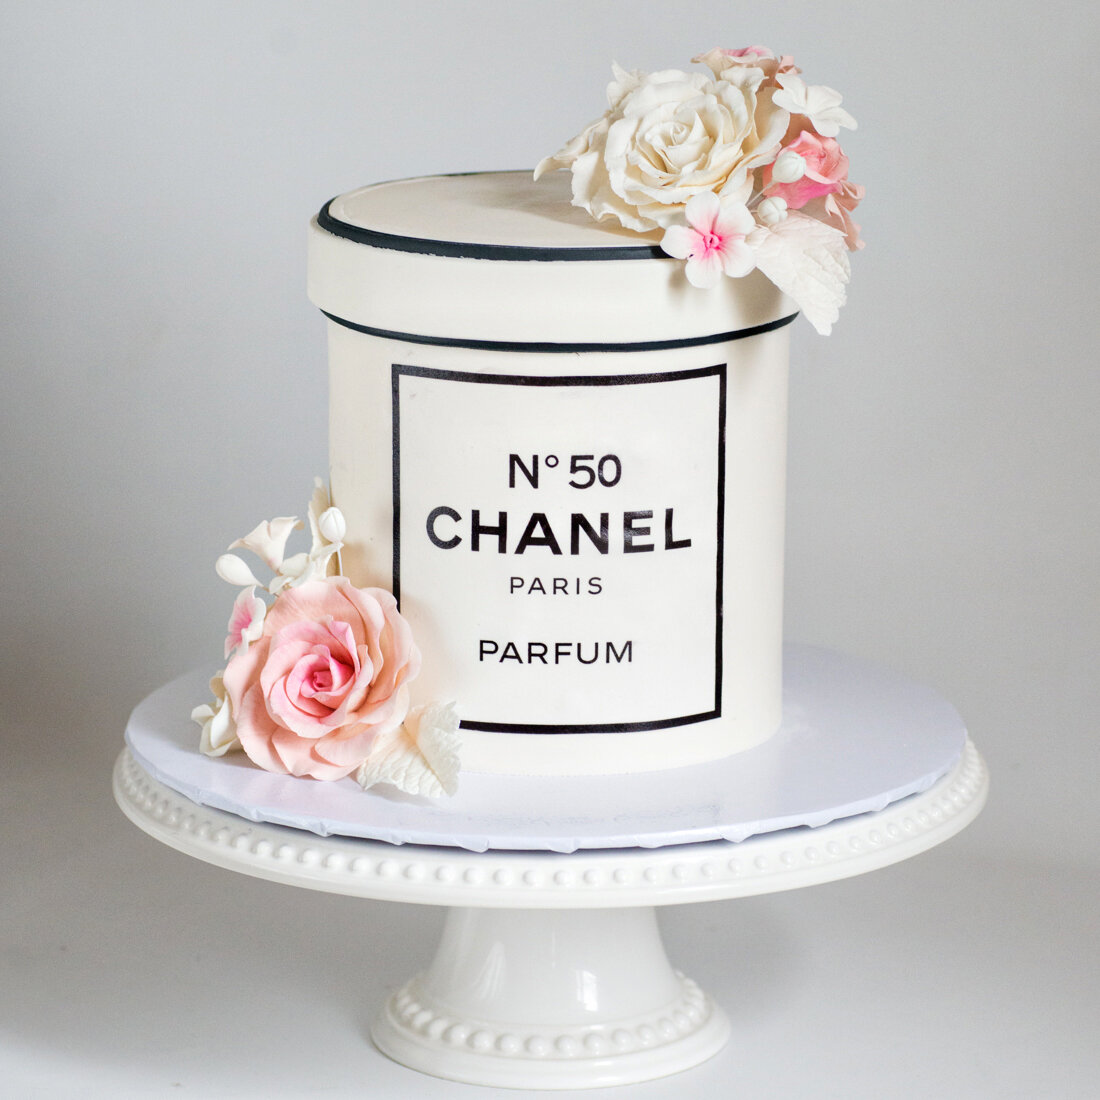 Chanel No. 50 Birthday Cake